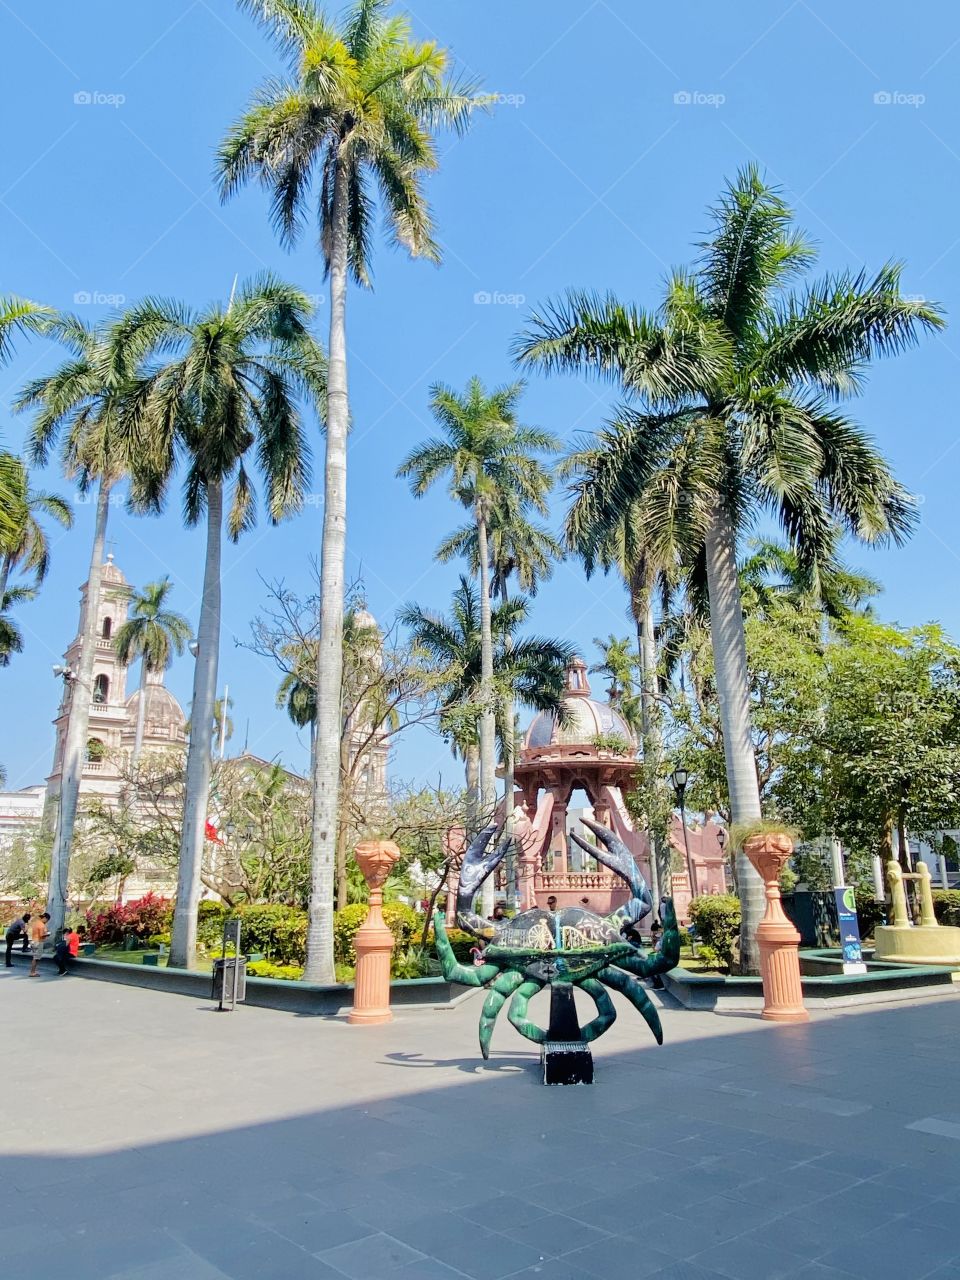 Plaza,quiosco,Mexico,palmeras,iglesia